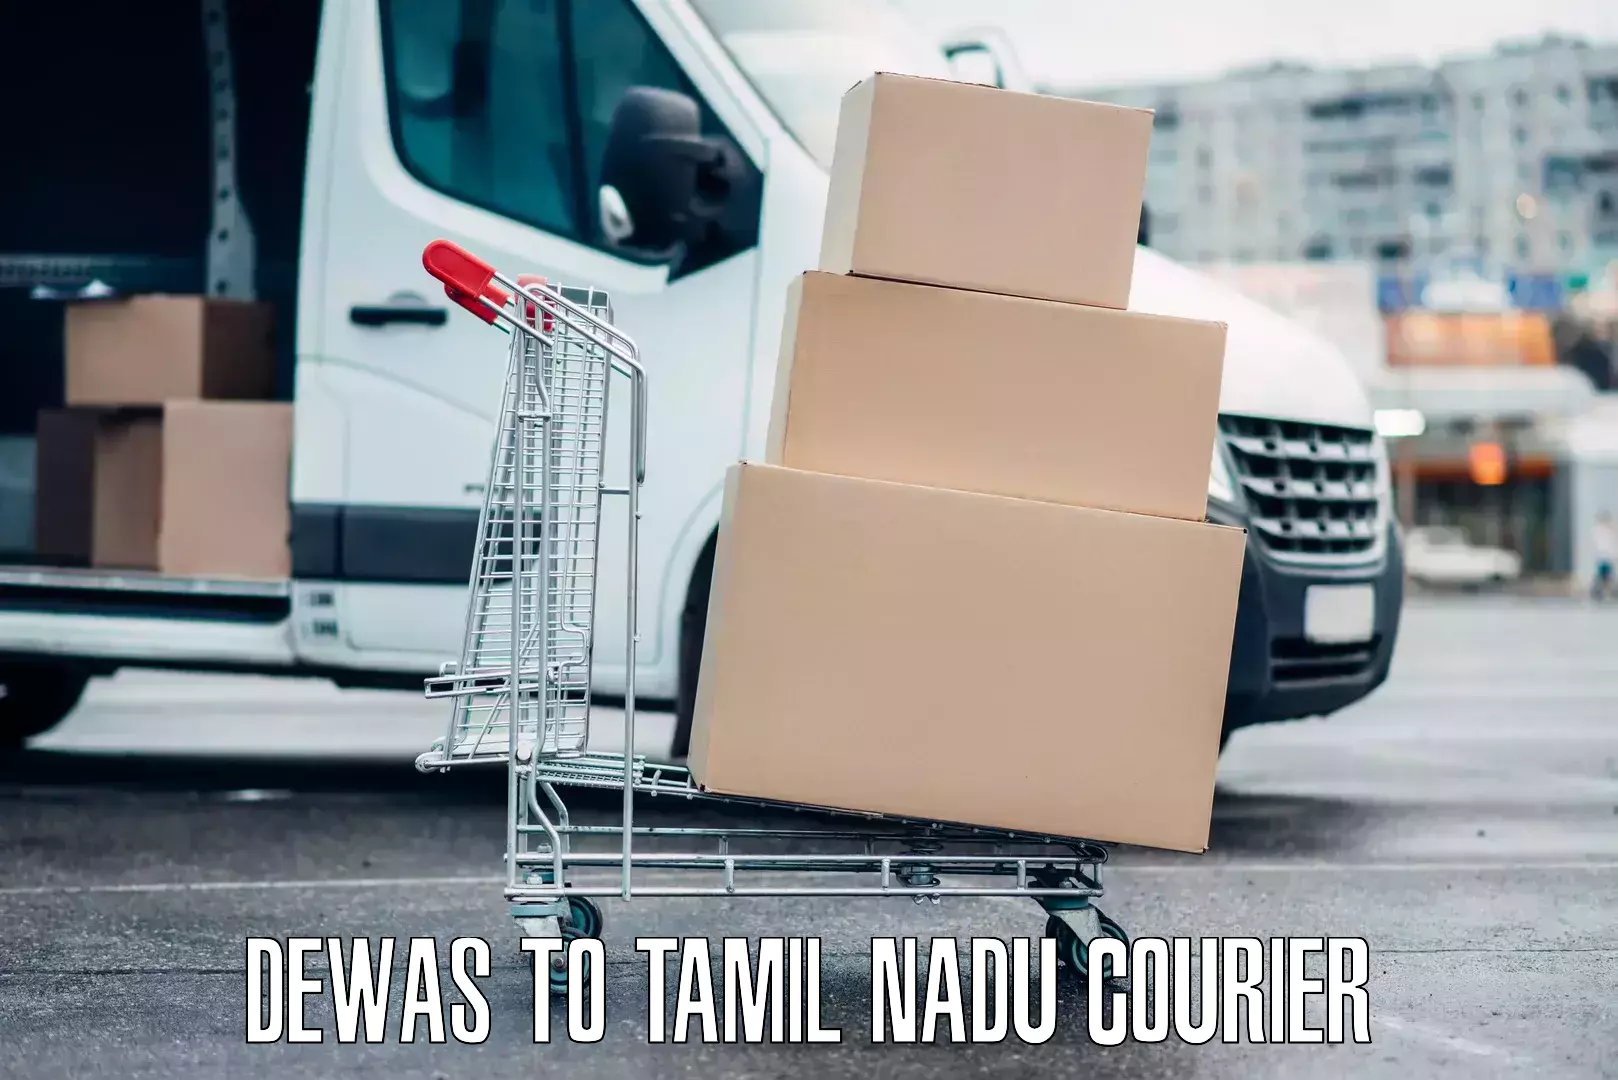 Same day luggage service Dewas to Tamil Nadu